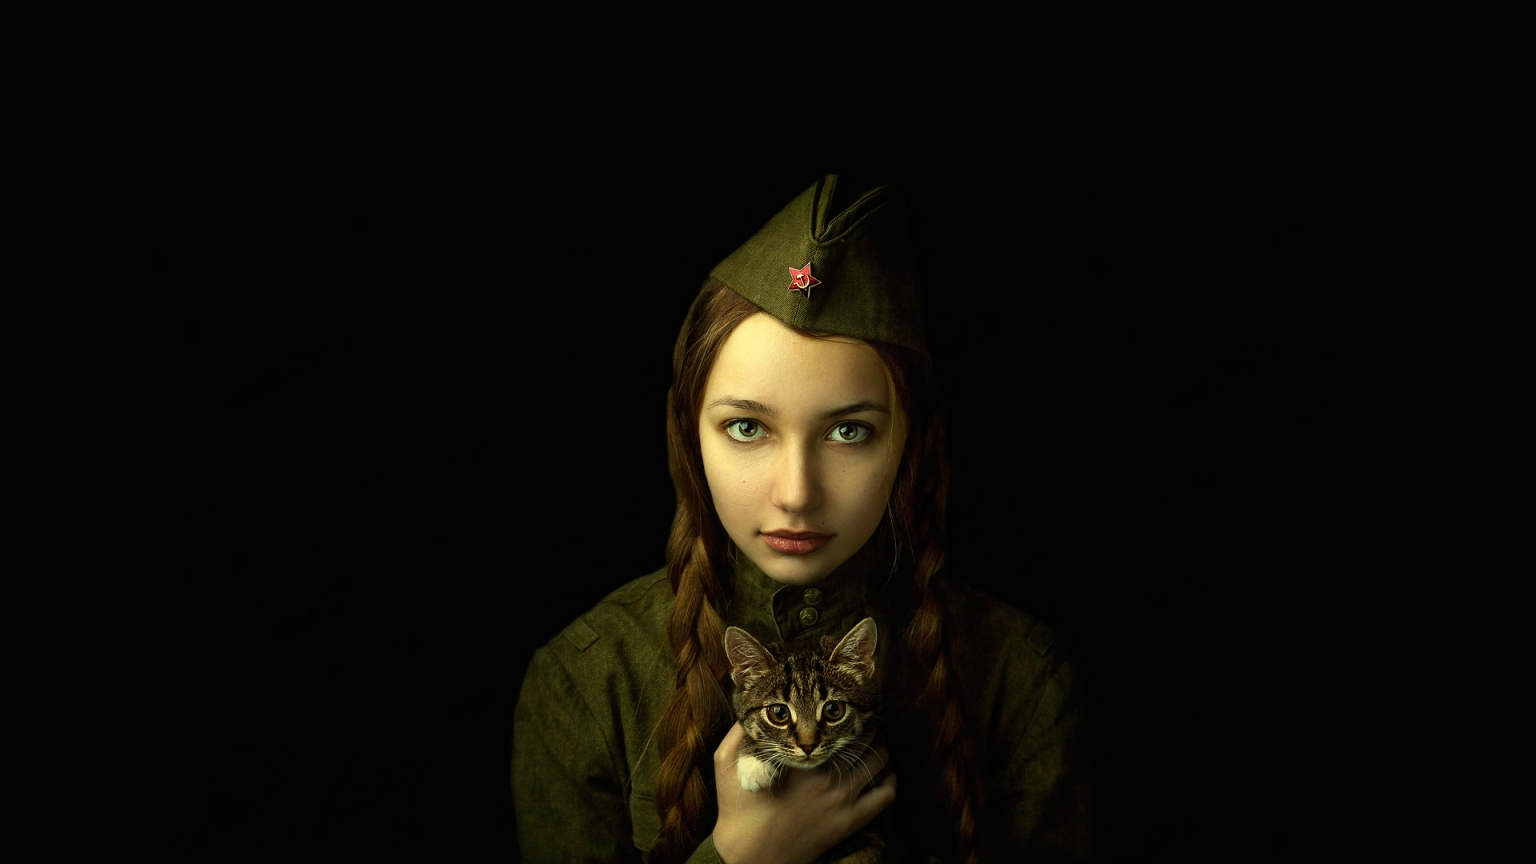 Soldier Girl Portrait for 1536 x 864 HDTV resolution